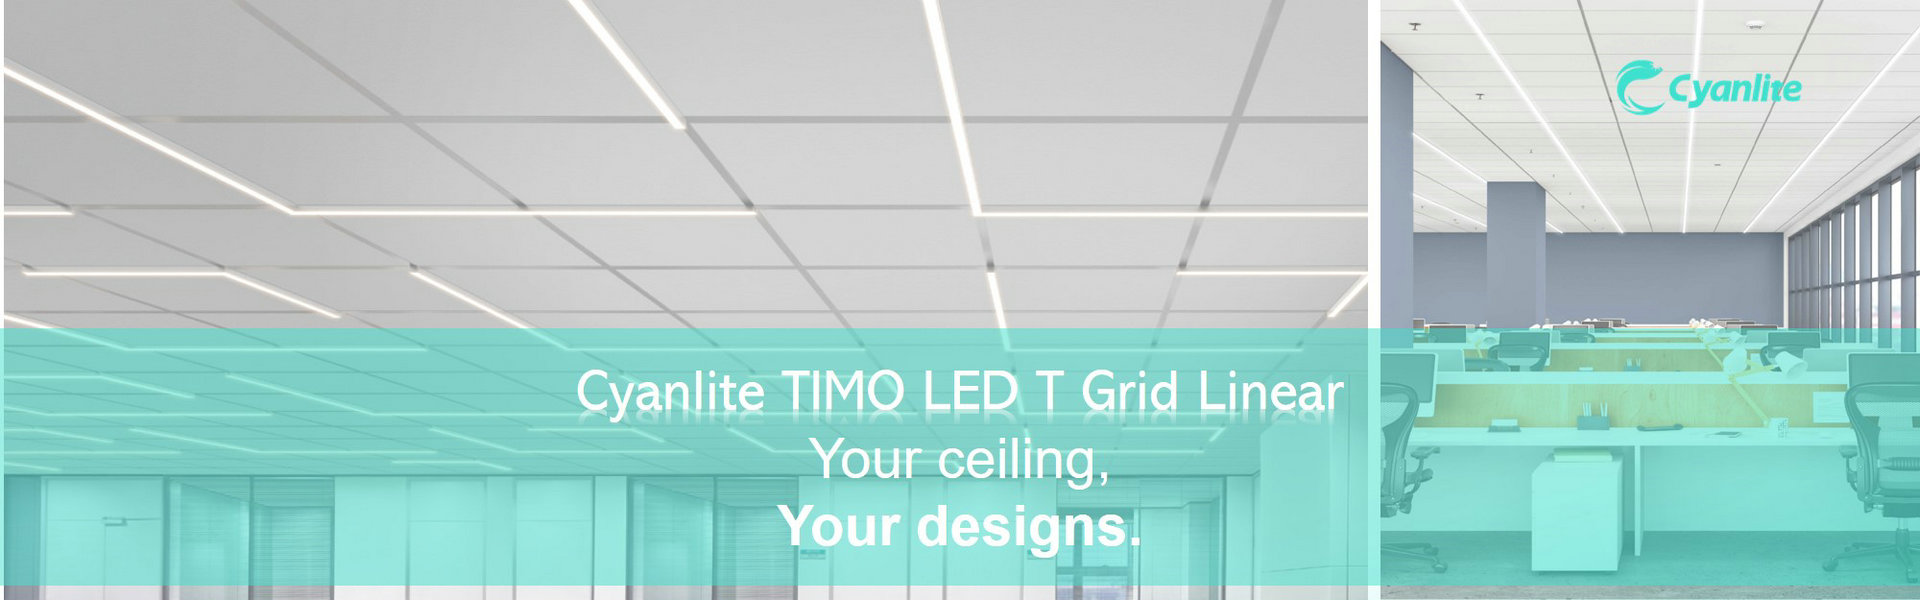 Cyanlite LED T grid linear TIMO